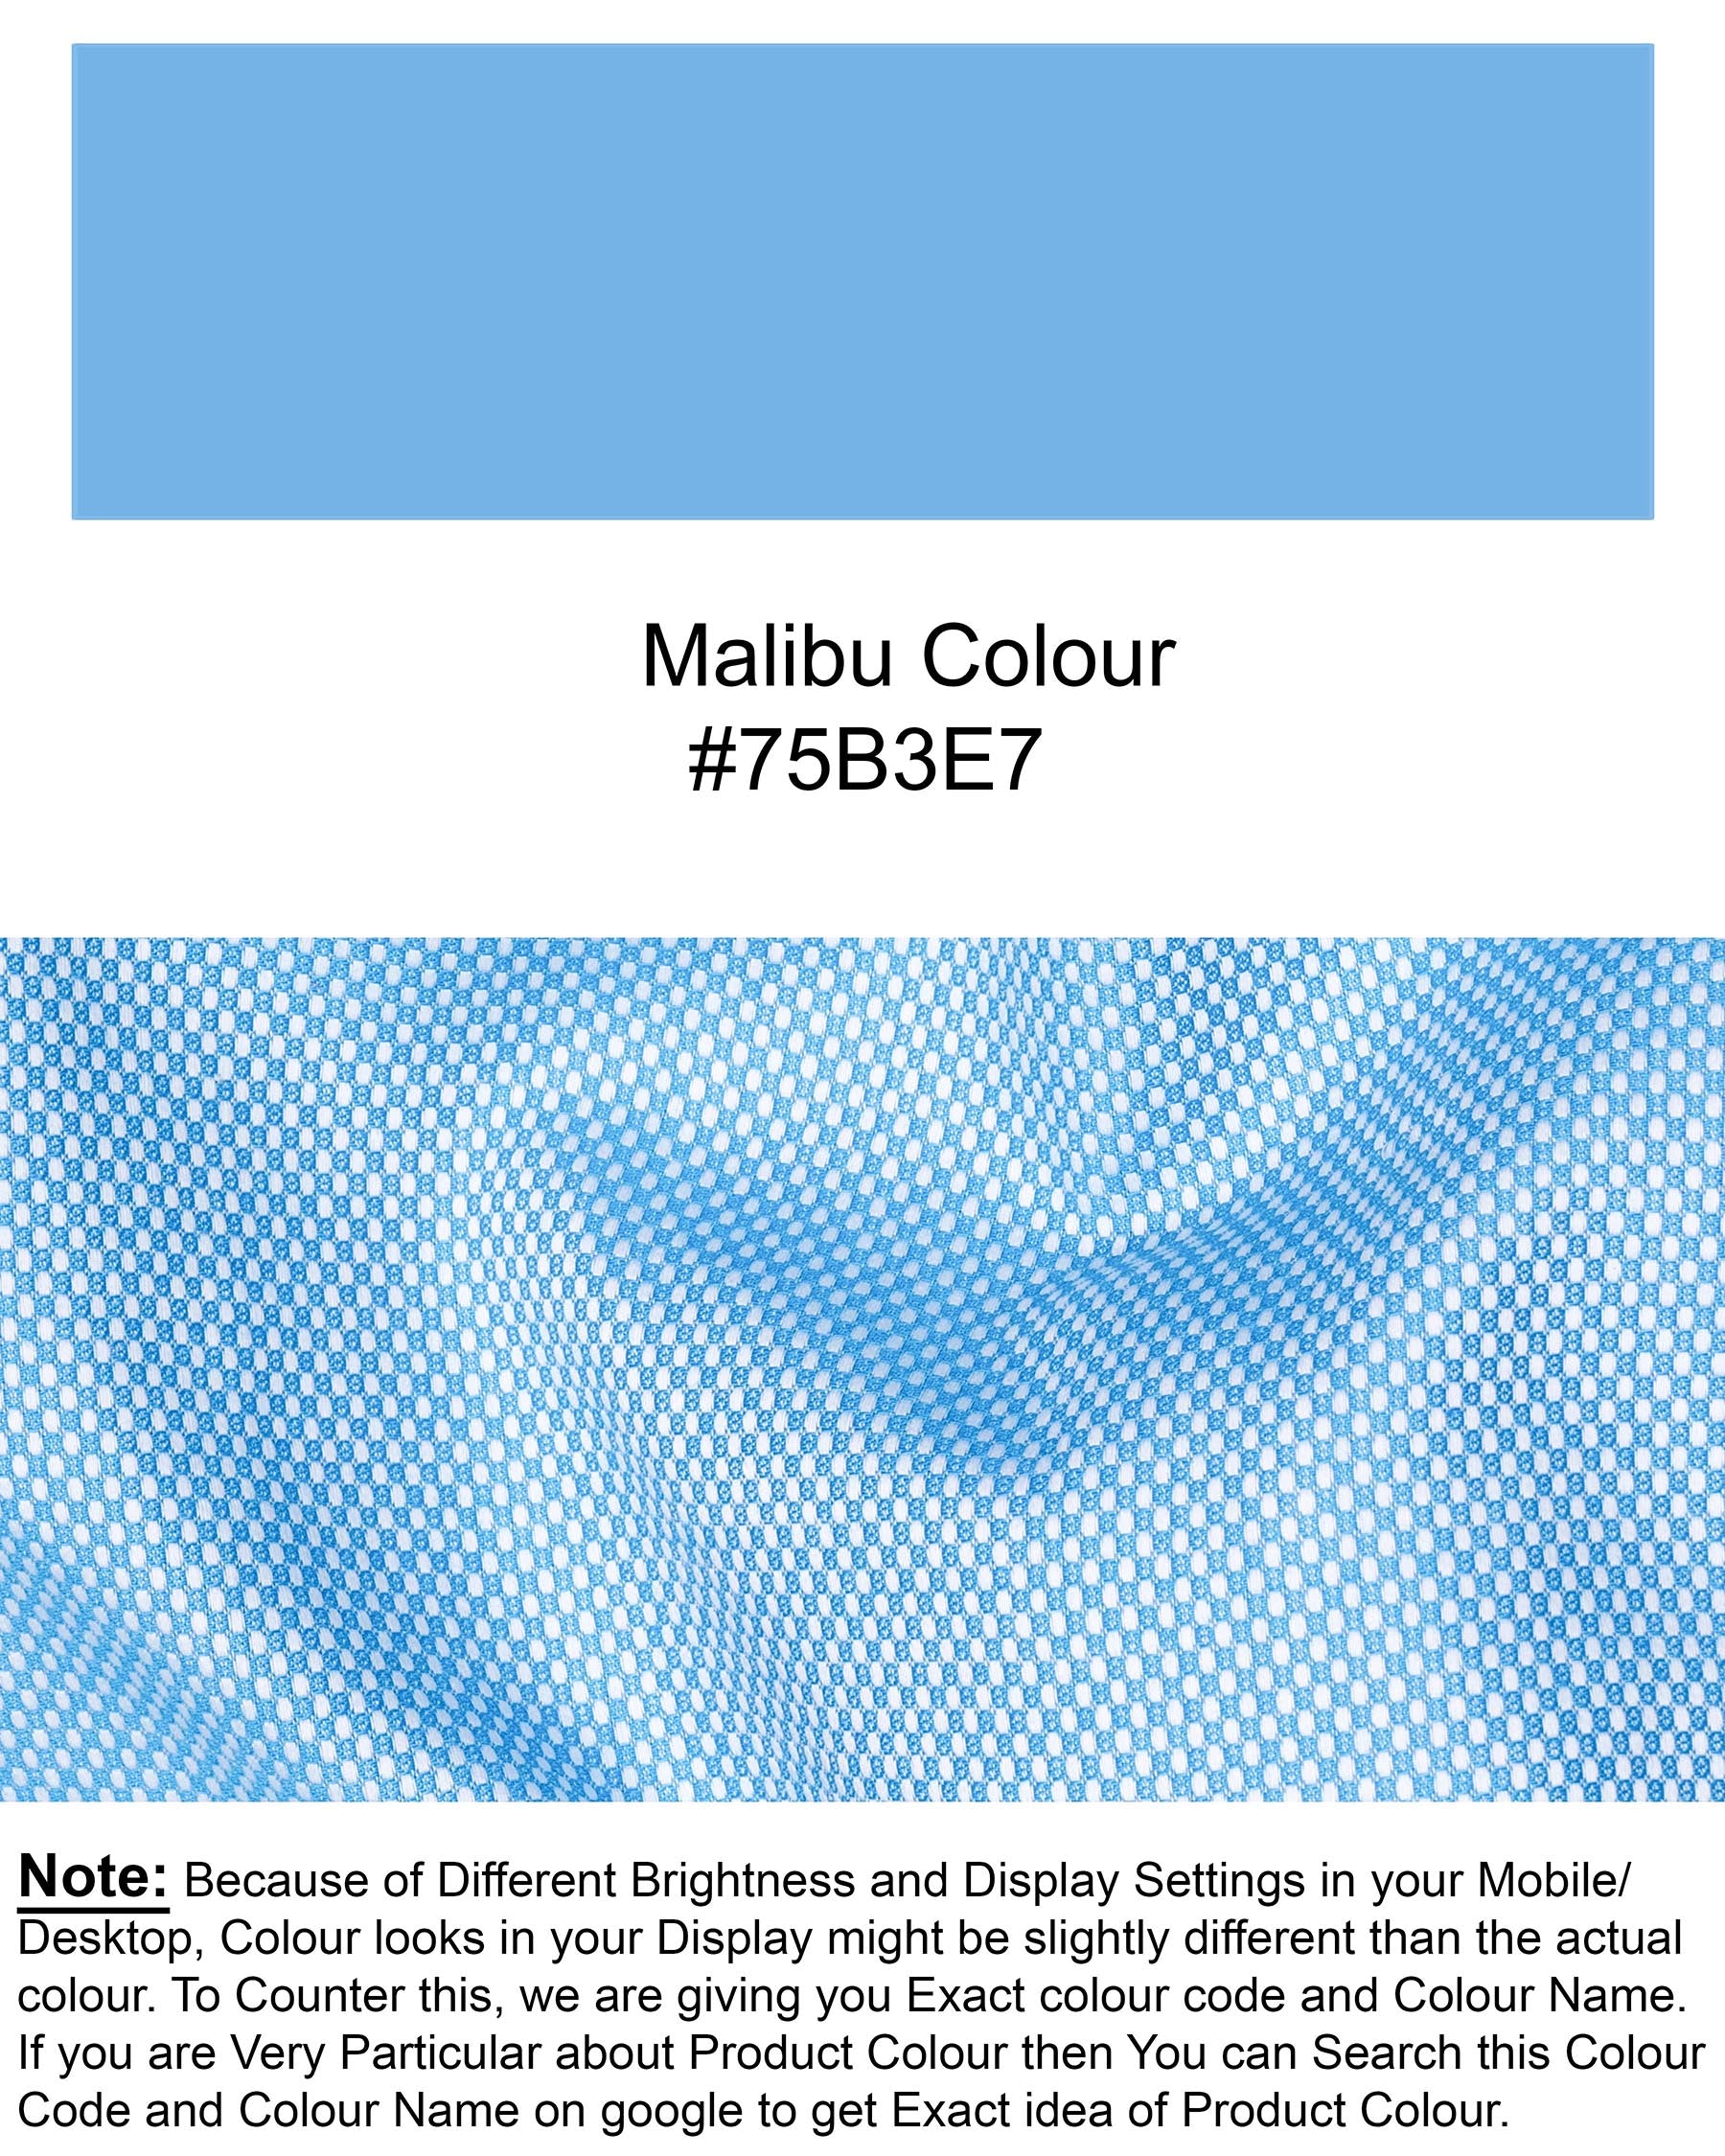 Malibu Blue with White Collar Dobby Premium Giza Cotton Shirt 5993-WCC-38, 5993-WCC-H-38, 5993-WCC-39, 5993-WCC-H-39, 5993-WCC-40, 5993-WCC-H-40, 5993-WCC-42, 5993-WCC-H-42, 5993-WCC-44, 5993-WCC-H-44, 5993-WCC-46, 5993-WCC-H-46, 5993-WCC-48, 5993-WCC-H-48, 5993-WCC-50, 5993-WCC-H-50, 5993-WCC-52, 5993-WCC-H-52